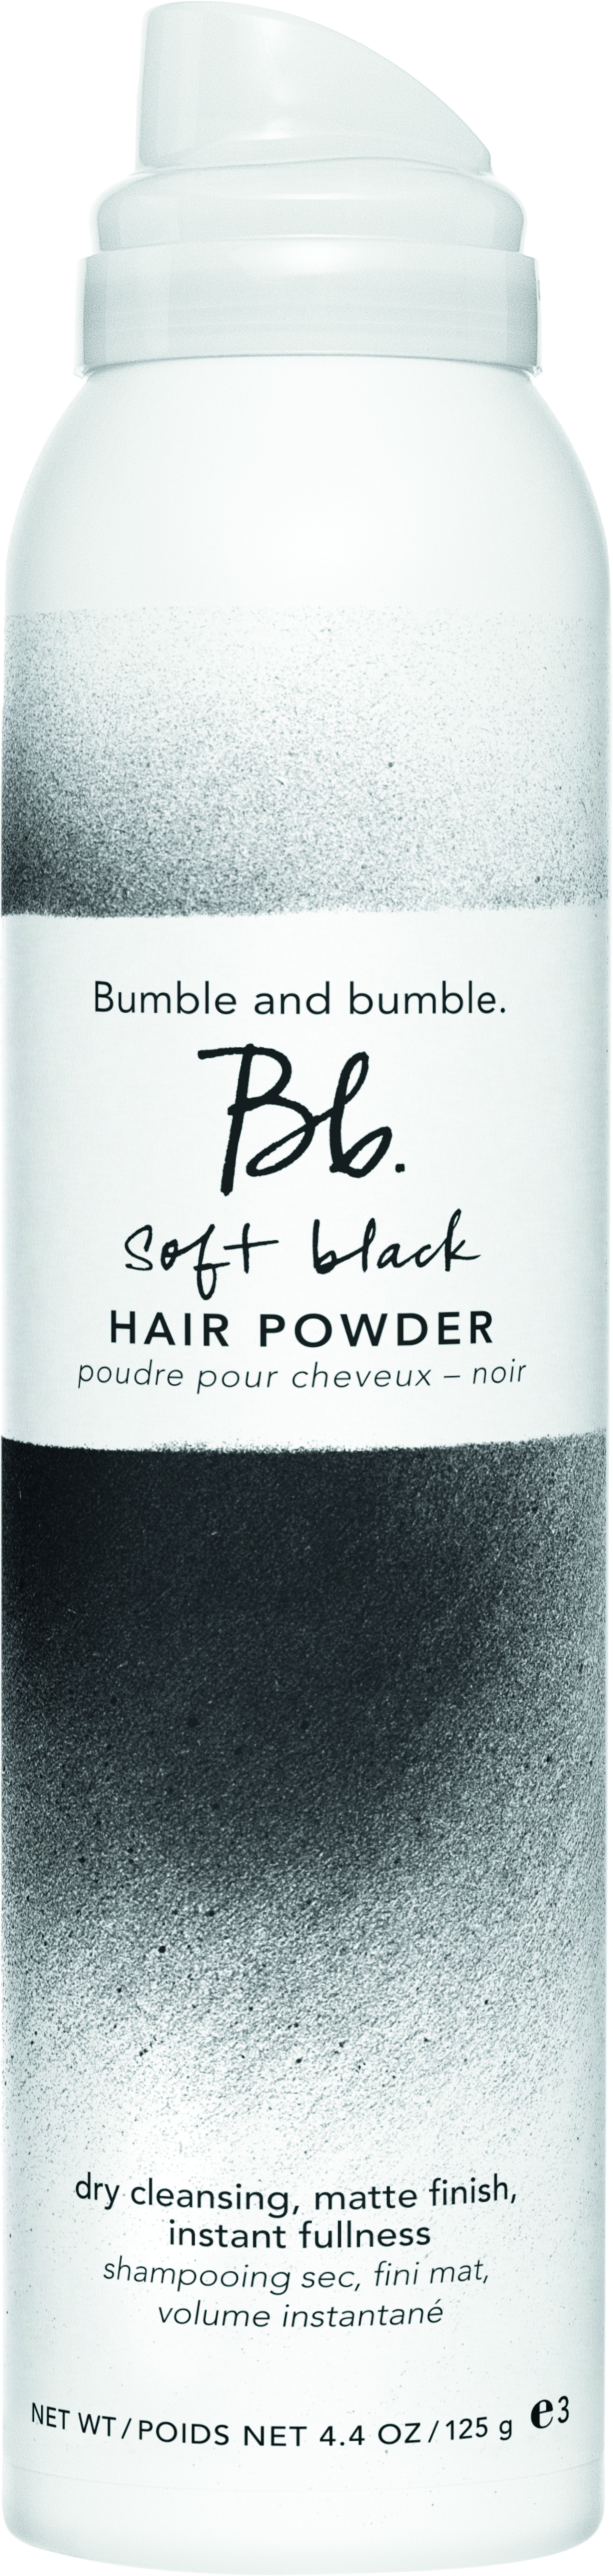 Bumble and bumble Soft Black Hair Powder 125g